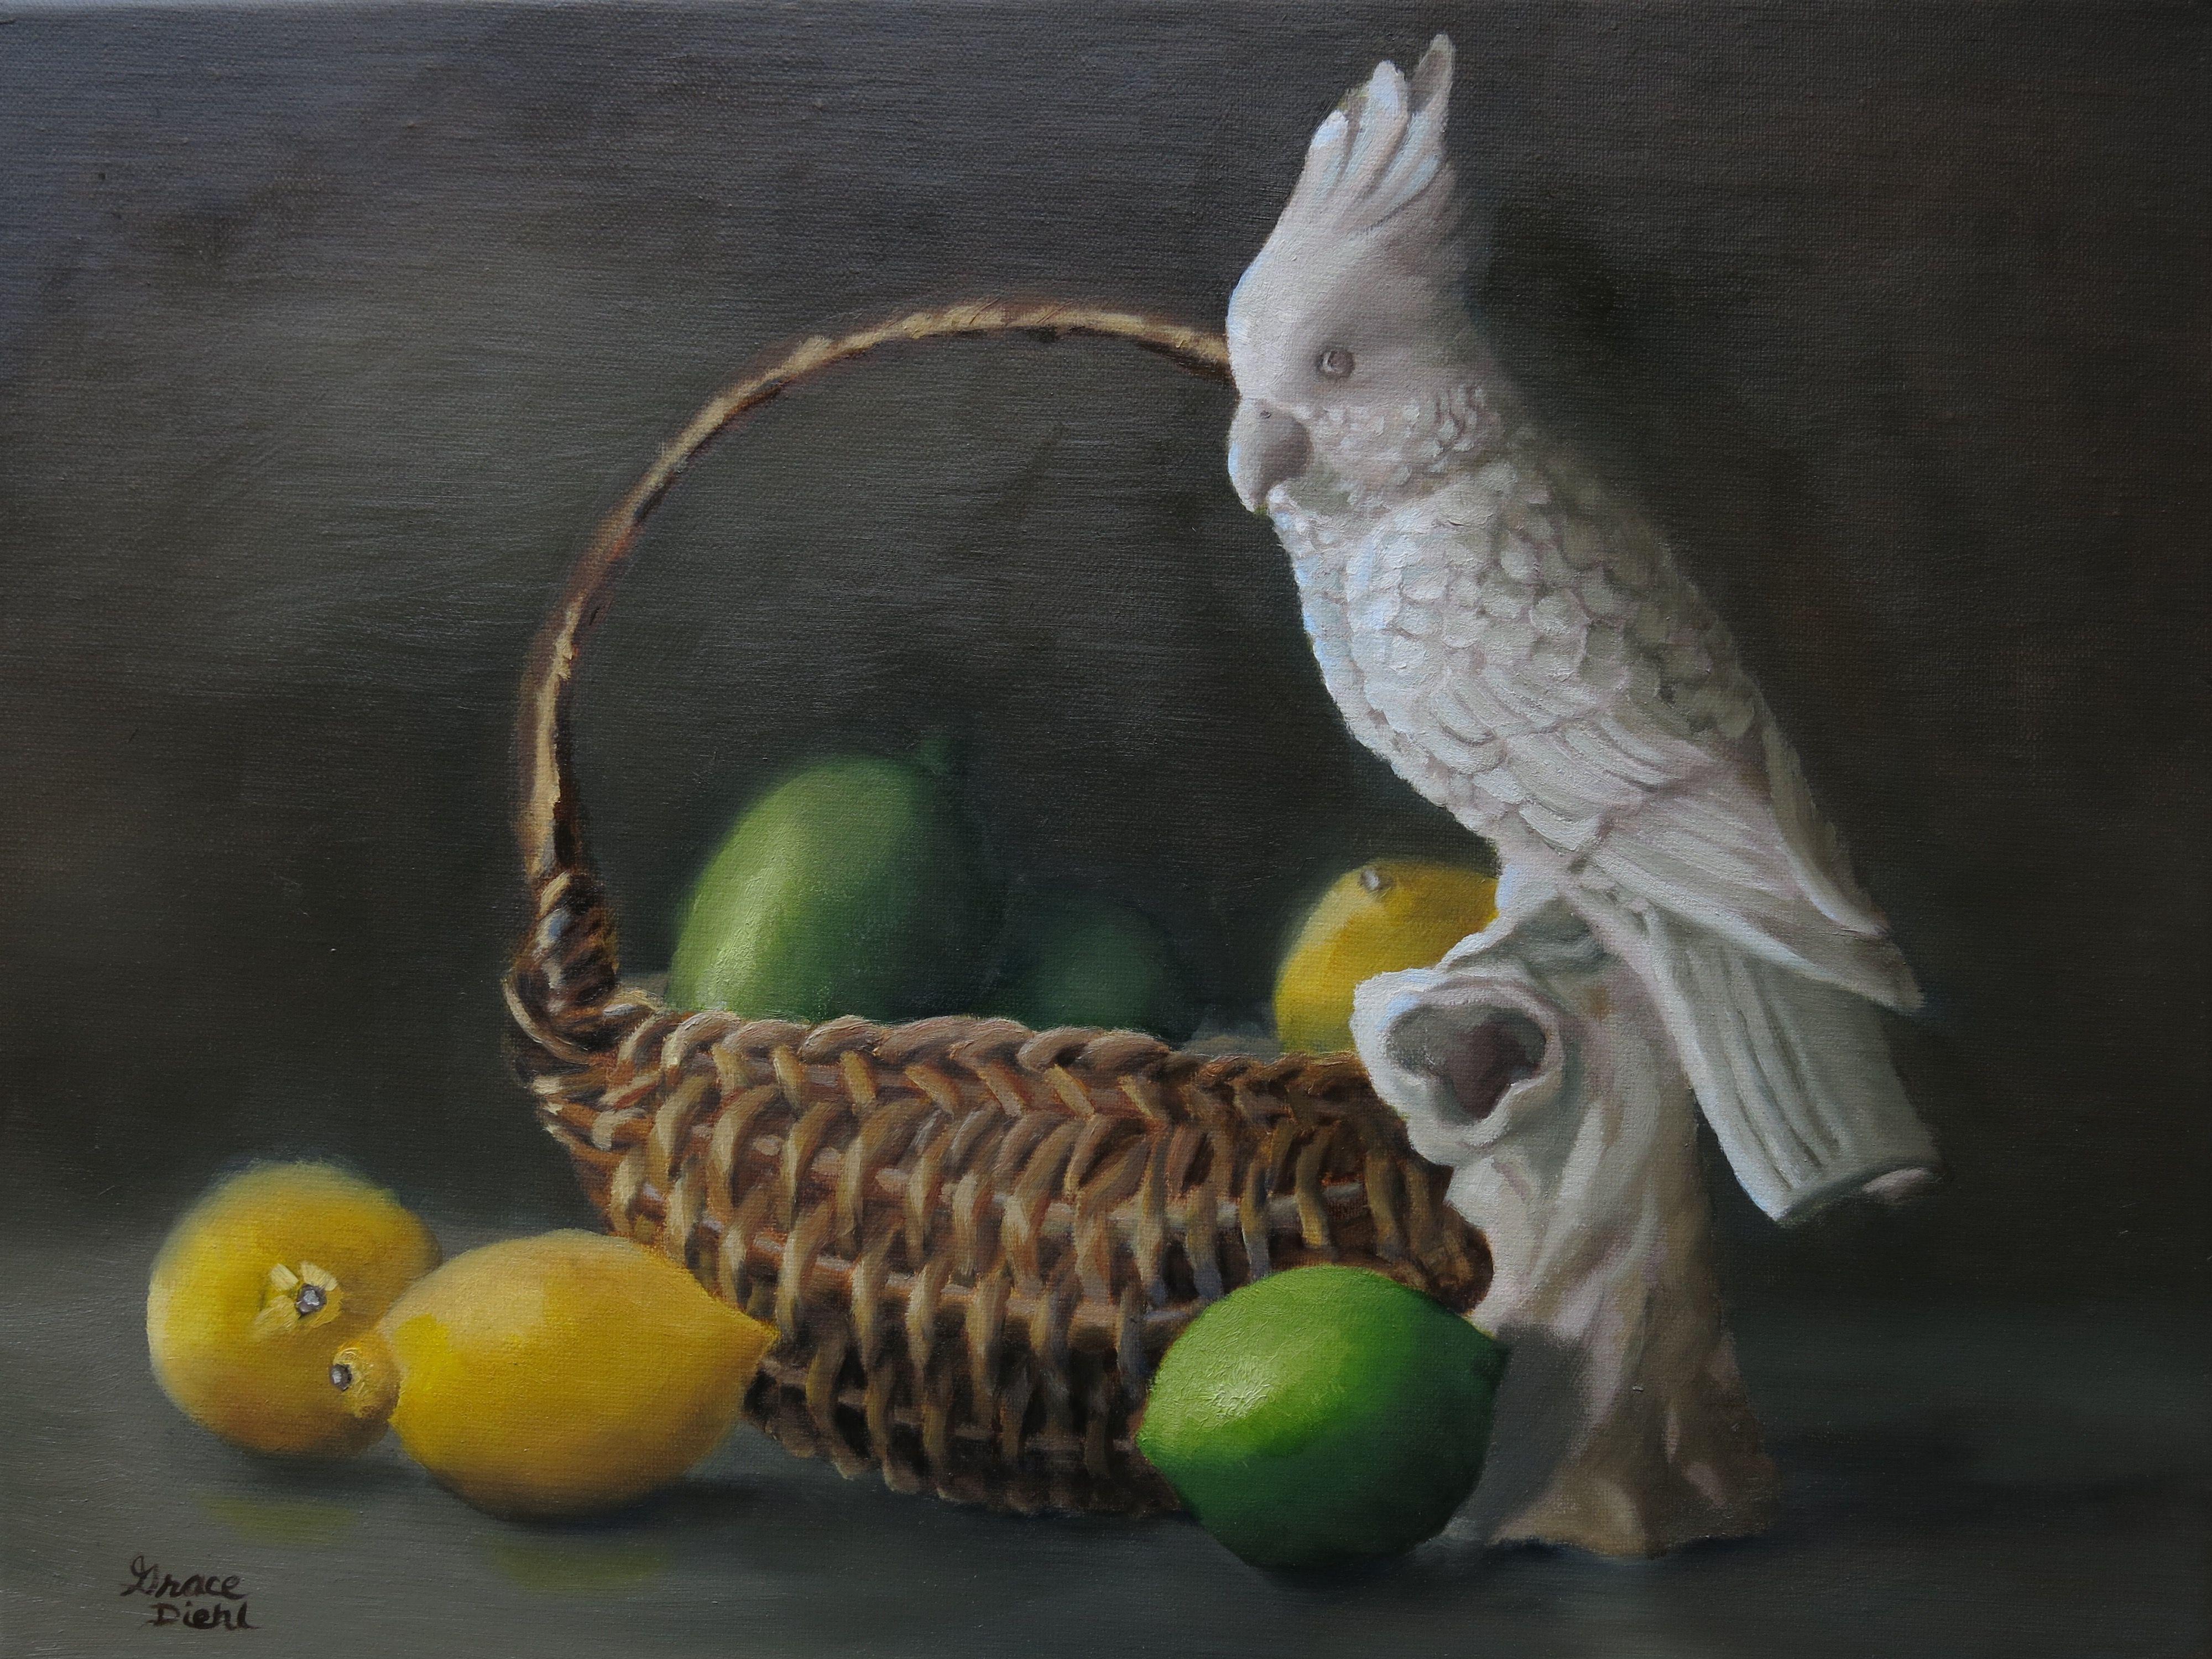 Parrot mit Citrus, Gemälde, Öl auf Leinwand